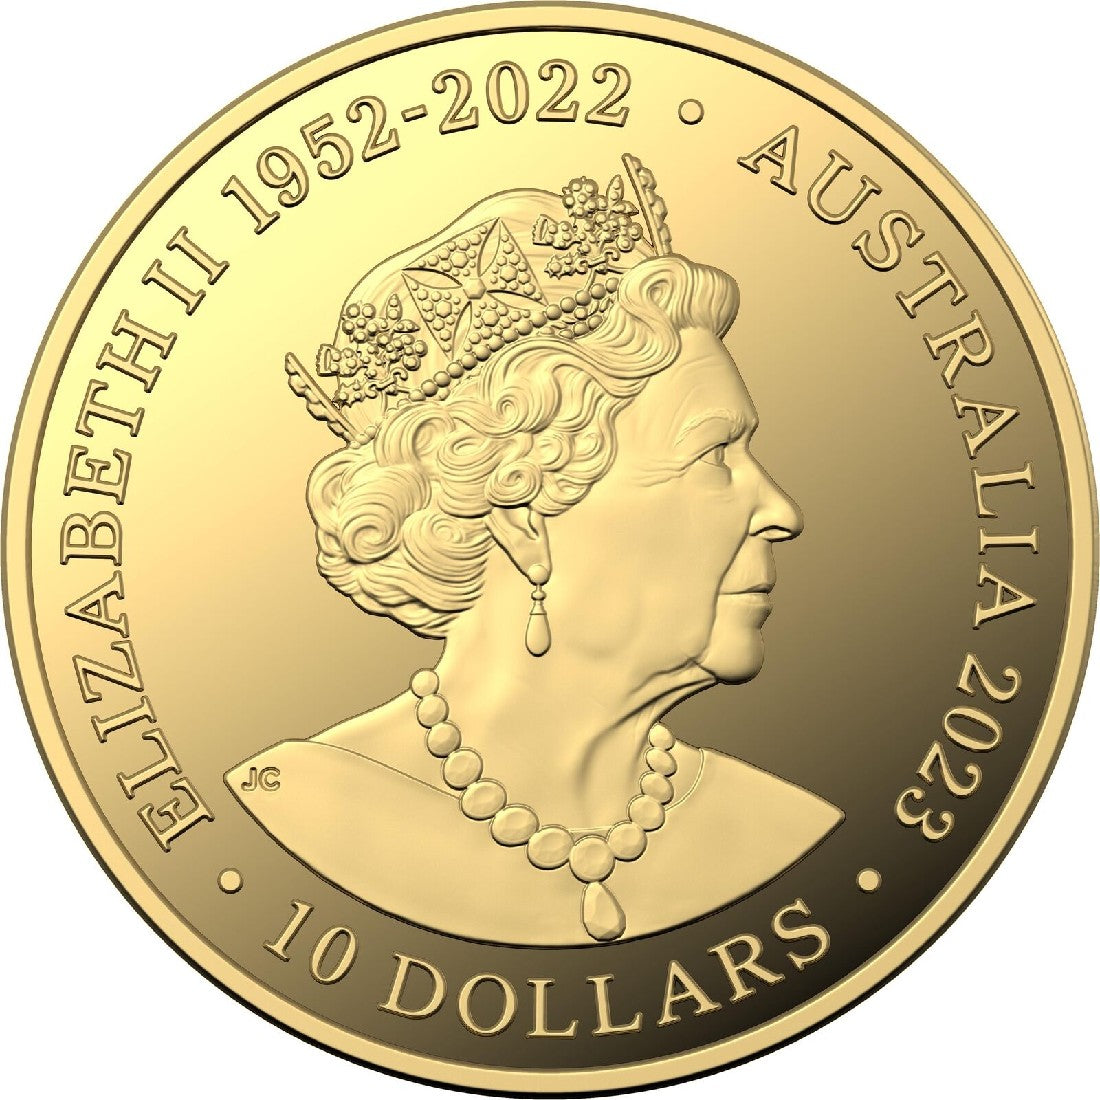 ROYAL AUSTRALIAN MINT CREATURES OF THE DEEP 2023 $10 'C' MINTMARK GOLD PROOF COIN